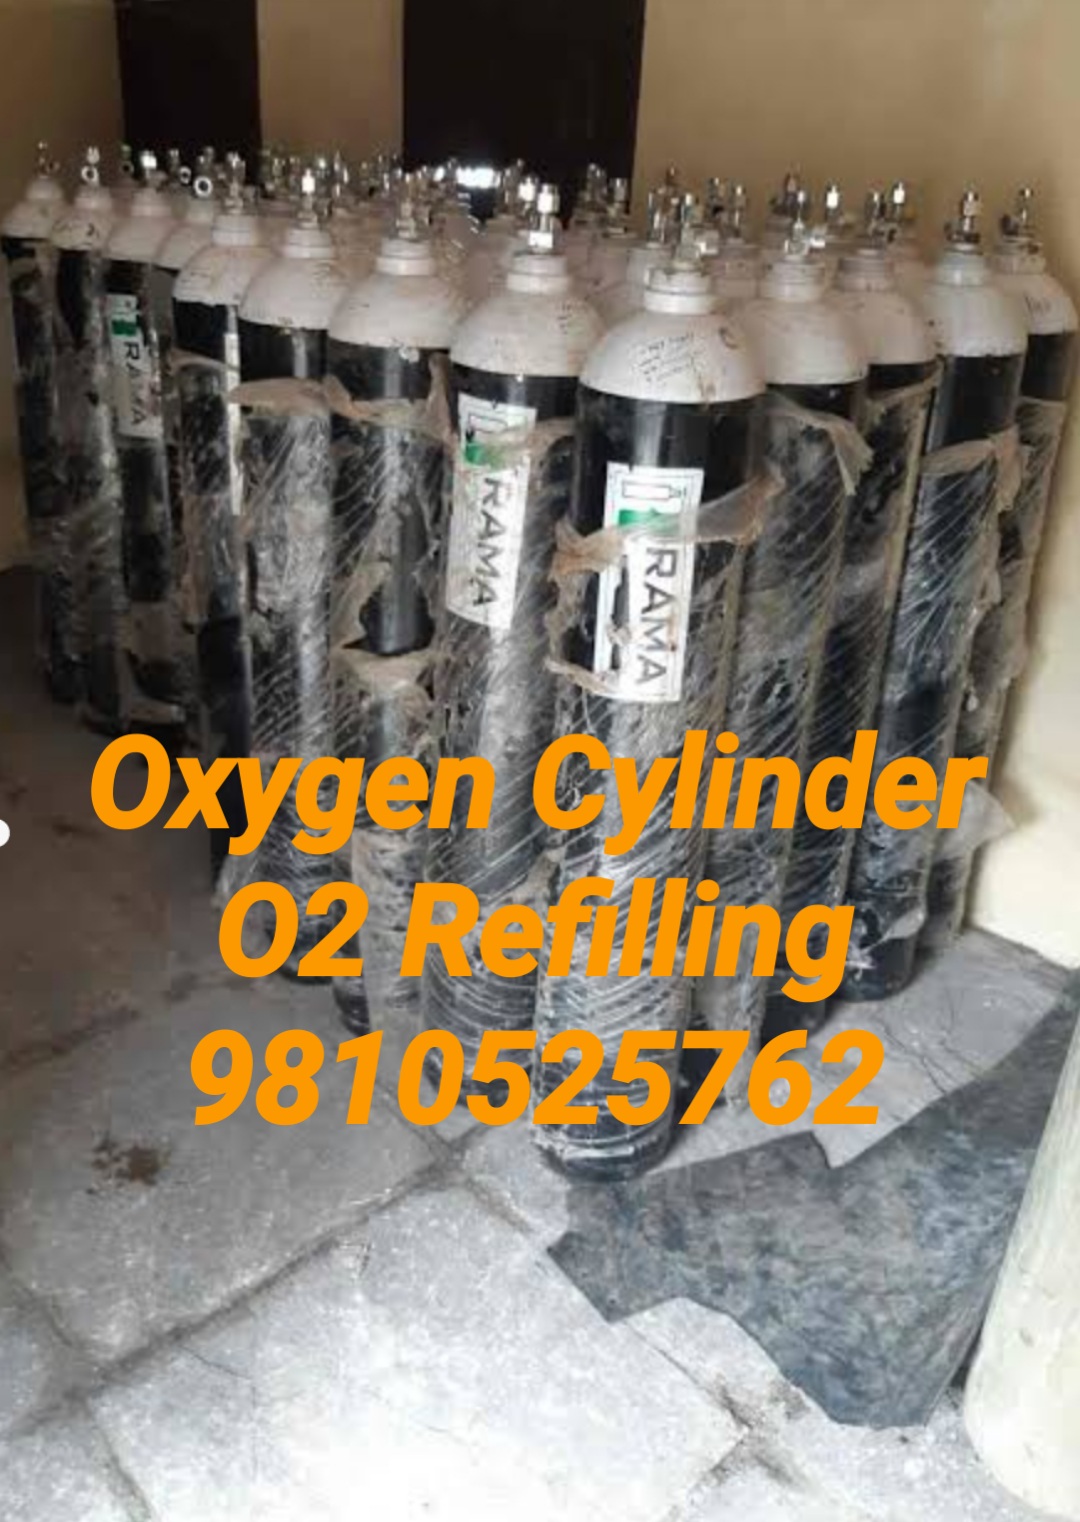 JUMBO 50 LITER OXYGEN CYLINDER REFILL IN NEW DELHI 8178463439